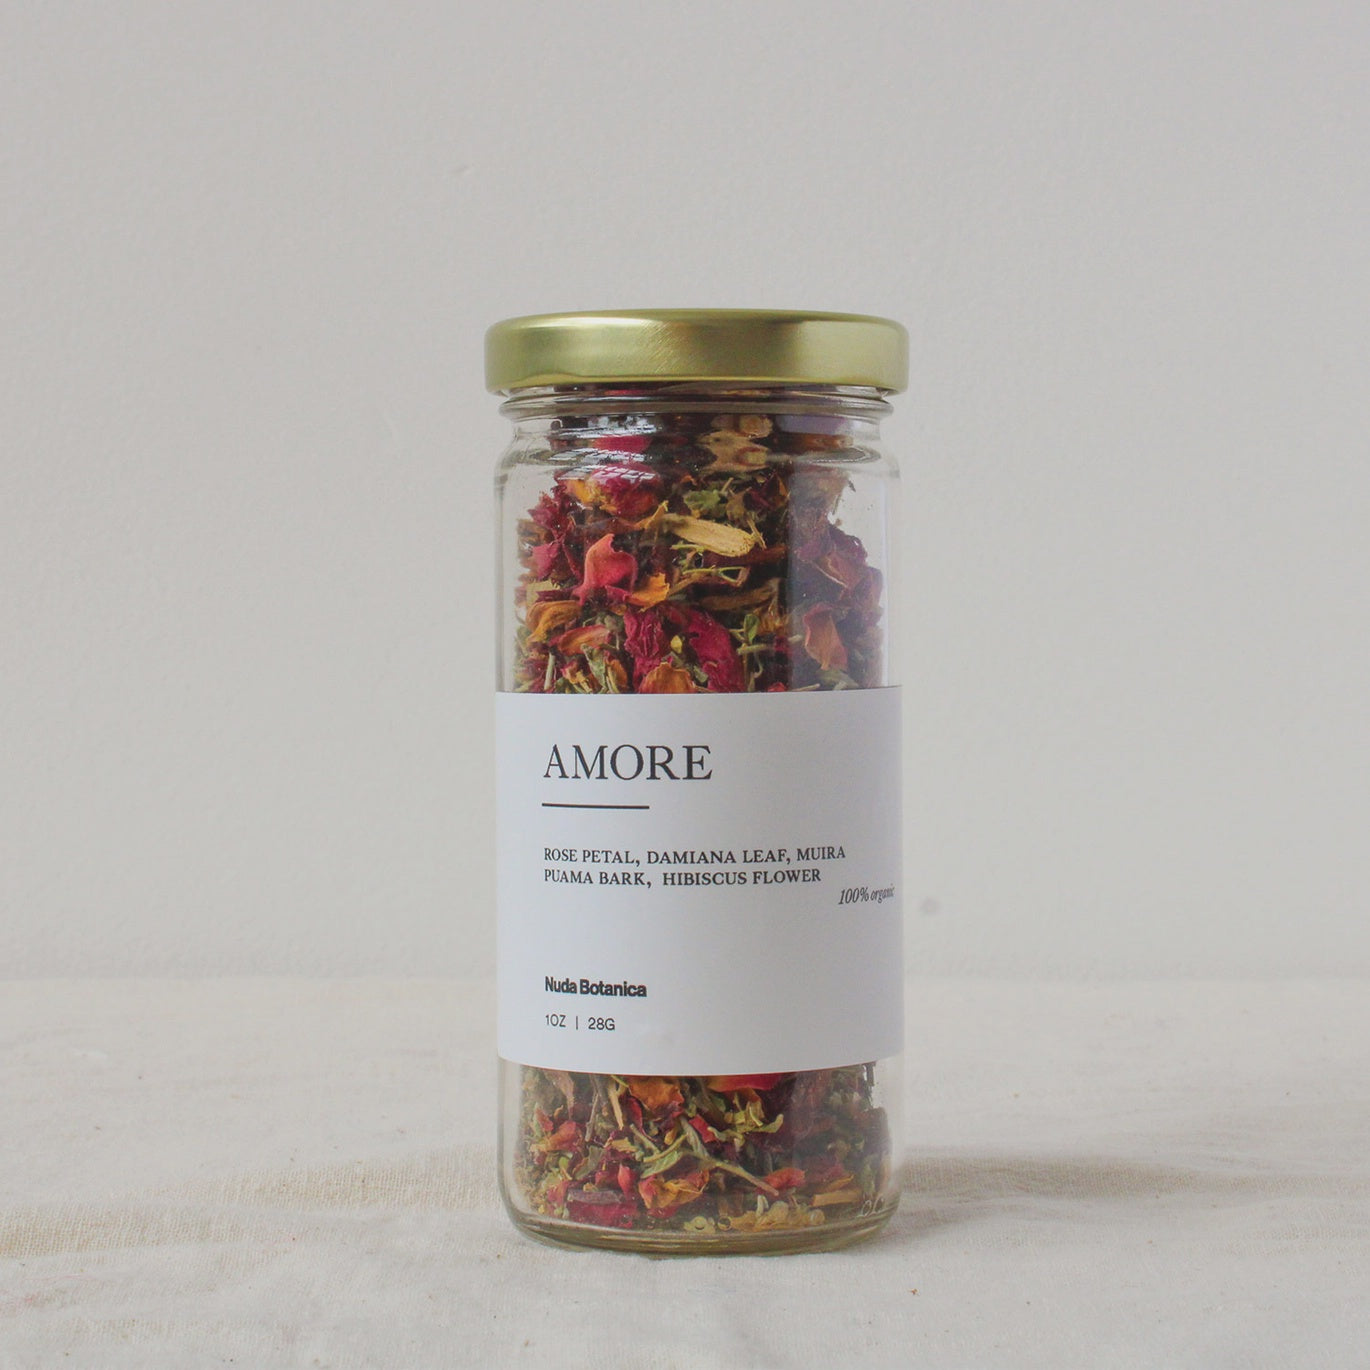 The Amore Organic Herbal Loose Leaf Tea by Nuda Botanica